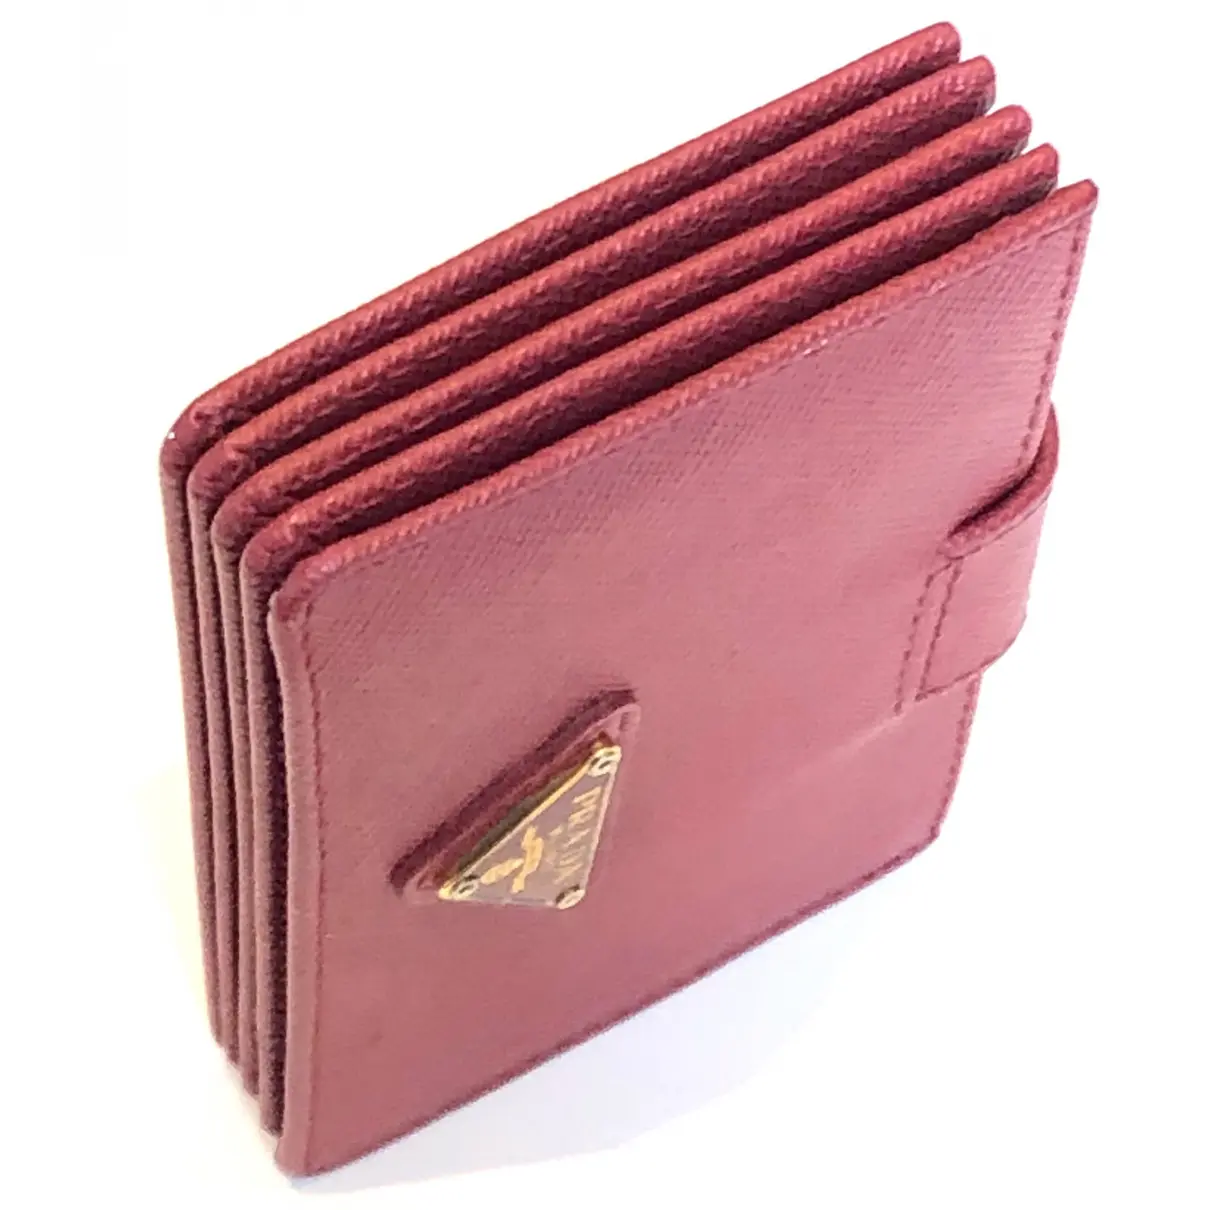 Leather card wallet Prada